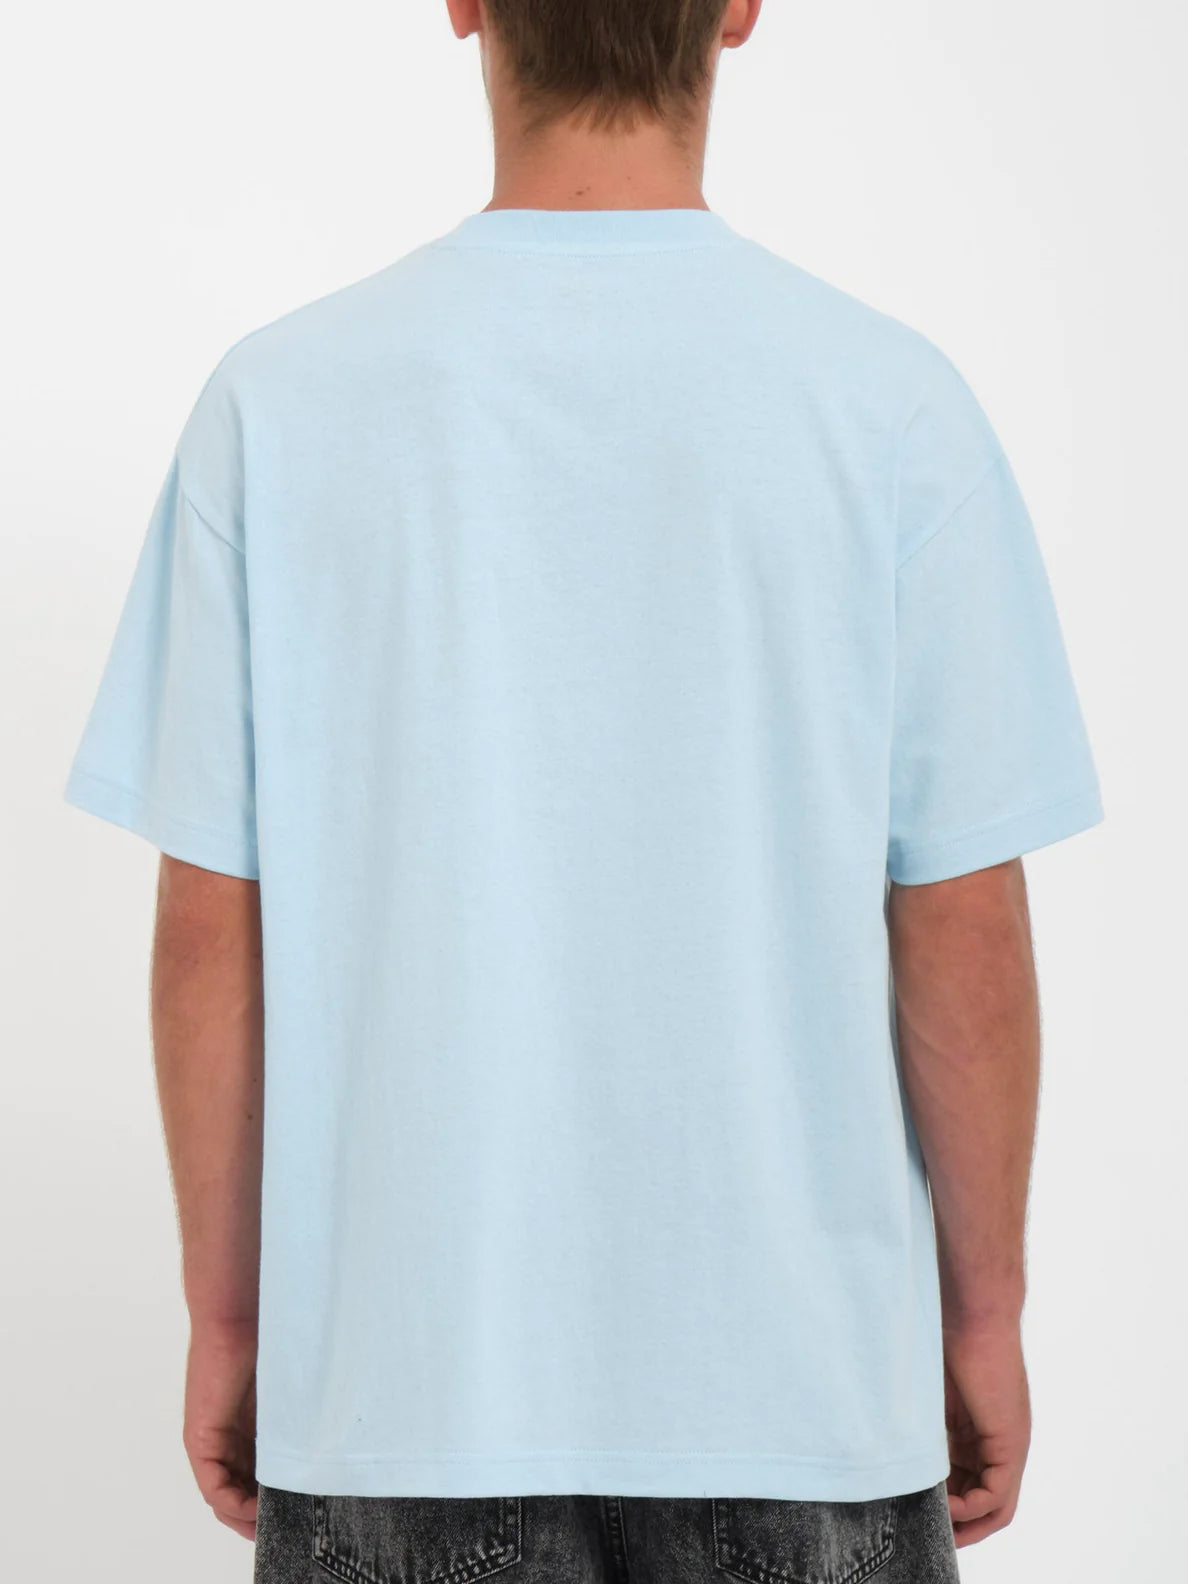 Camiseta Volcom Ripple Stone - Misty Blue | Camisetas de hombre | Camisetas manga corta de hombre | Volcom Shop | surfdevils.com